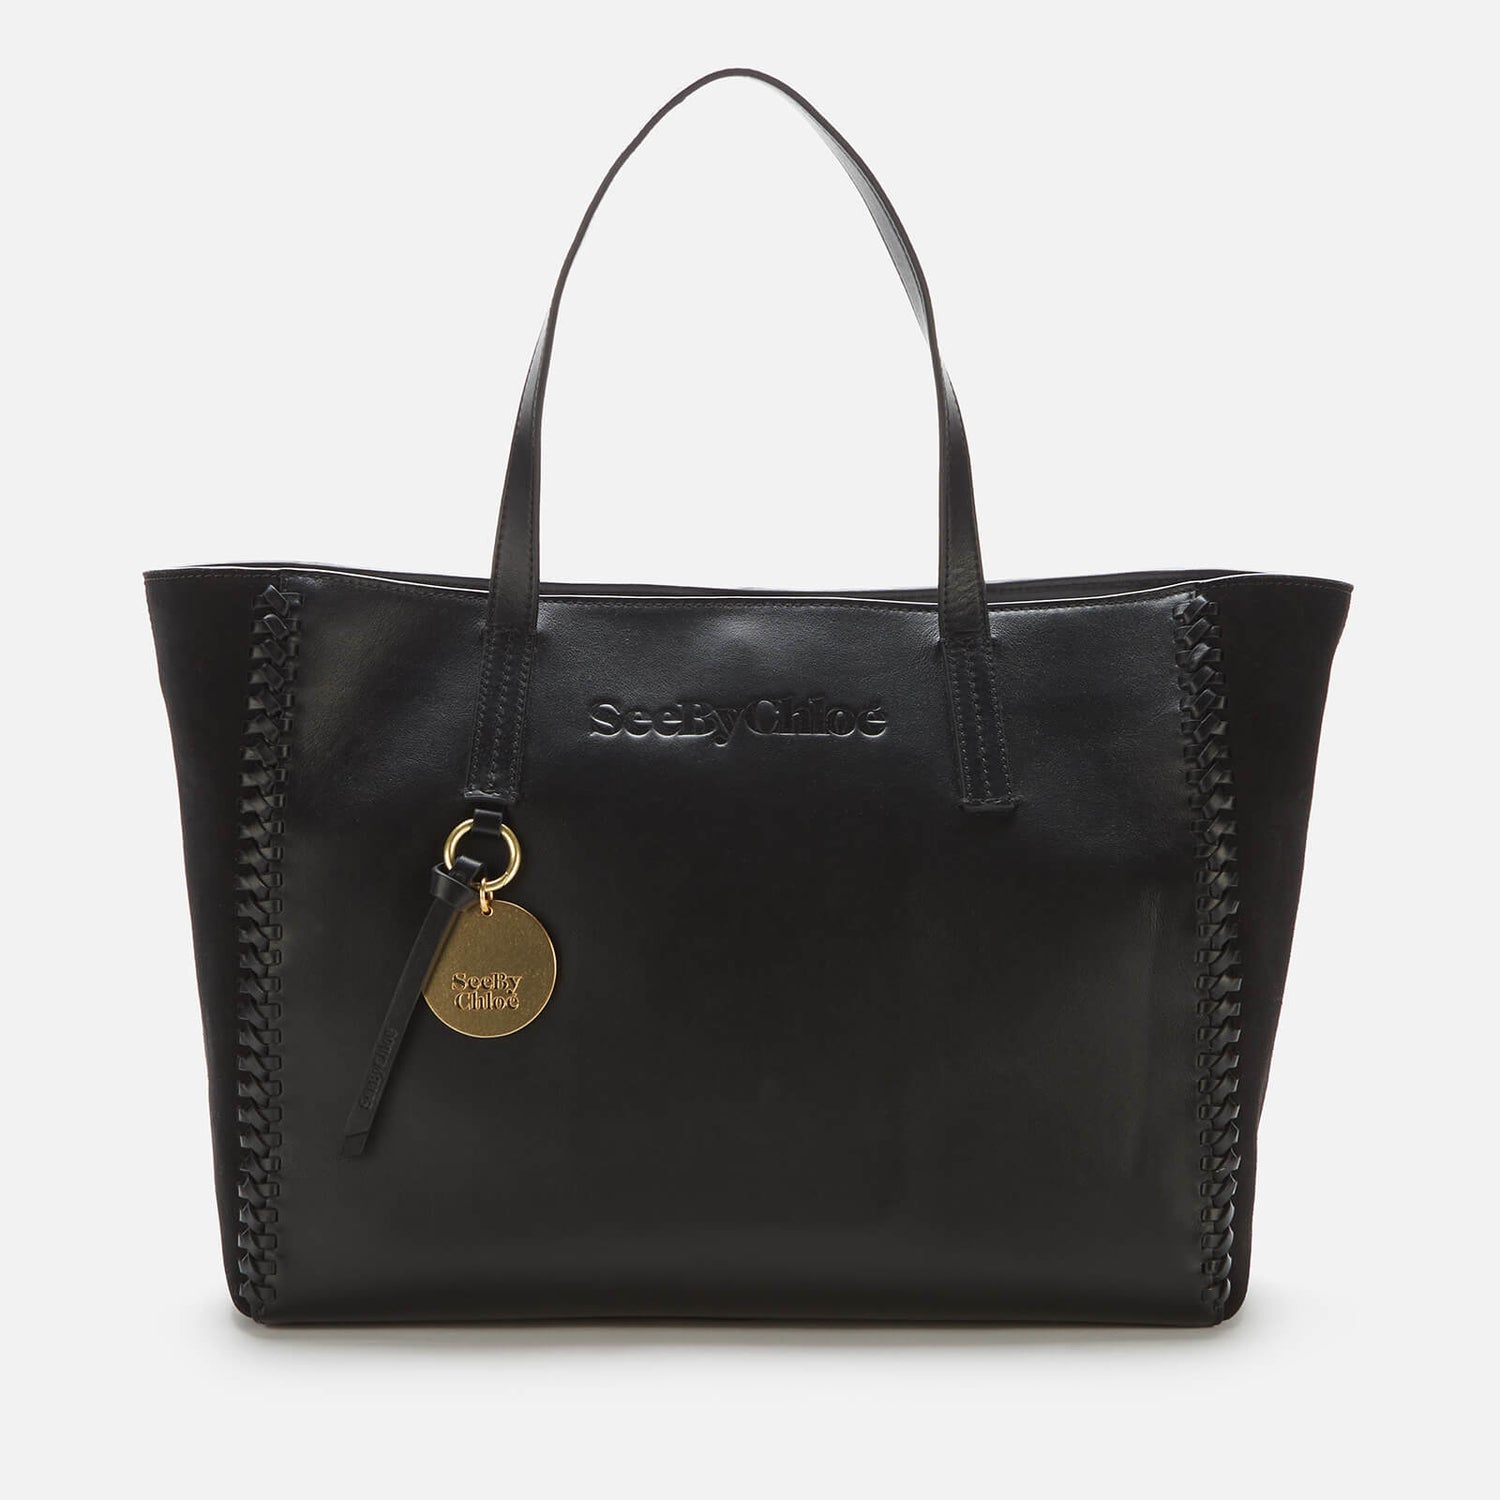 See By Chloé Women's Tilda Tote Bag - Black